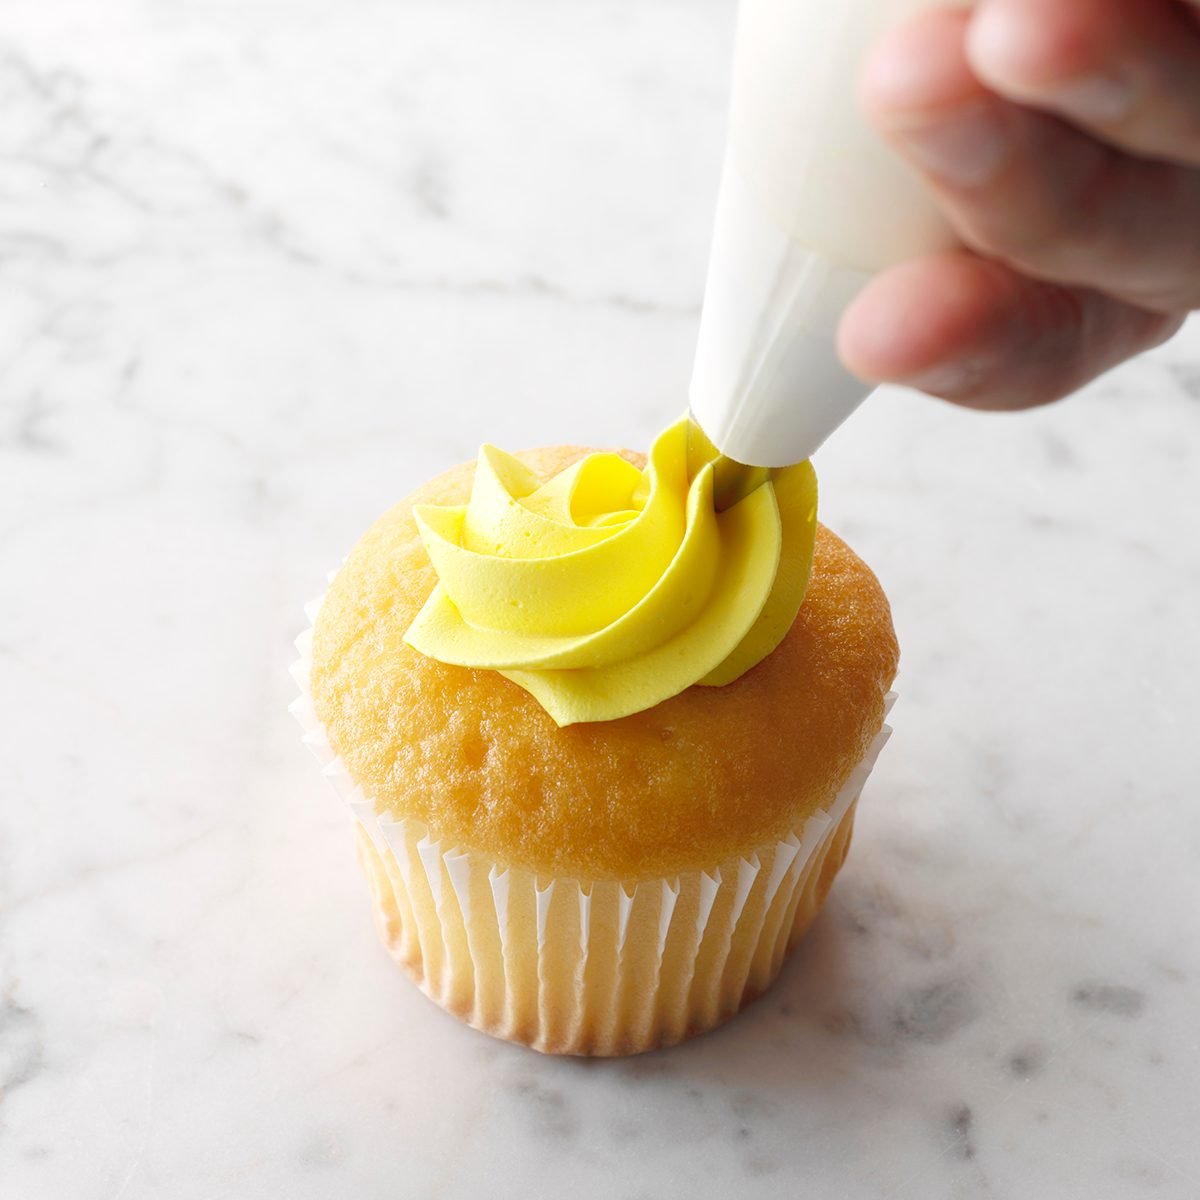 How To Make Simple Cupcake Designs! #cupcake #simple #design 